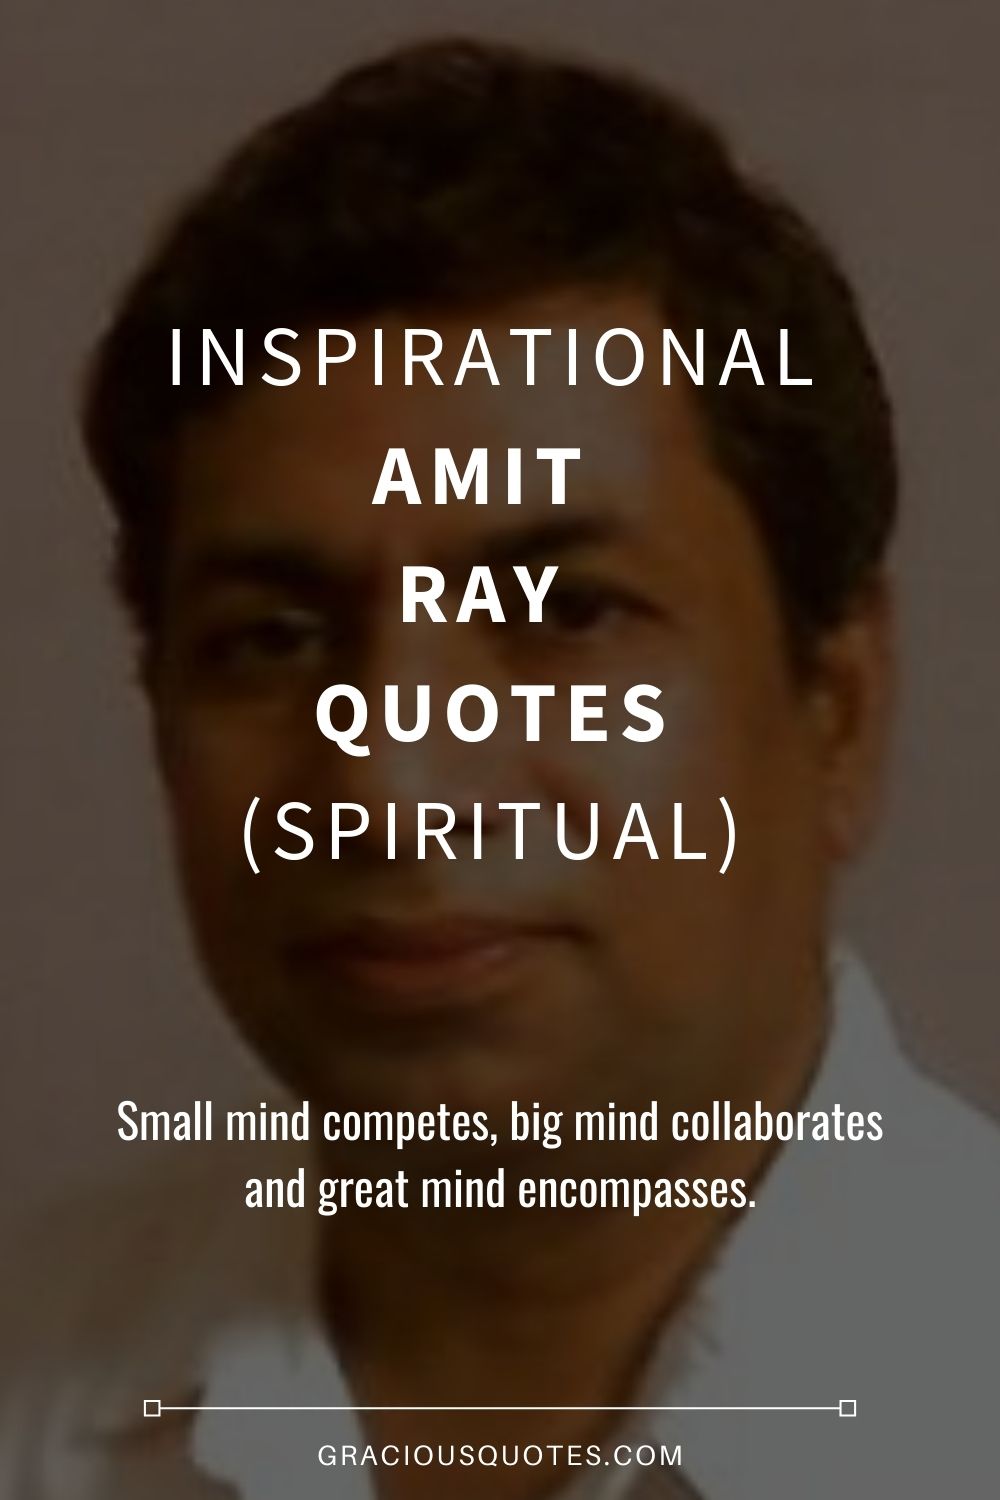 Inspirational Amit Ray Quotes (SPIRITUAL) - Gracious Quotes